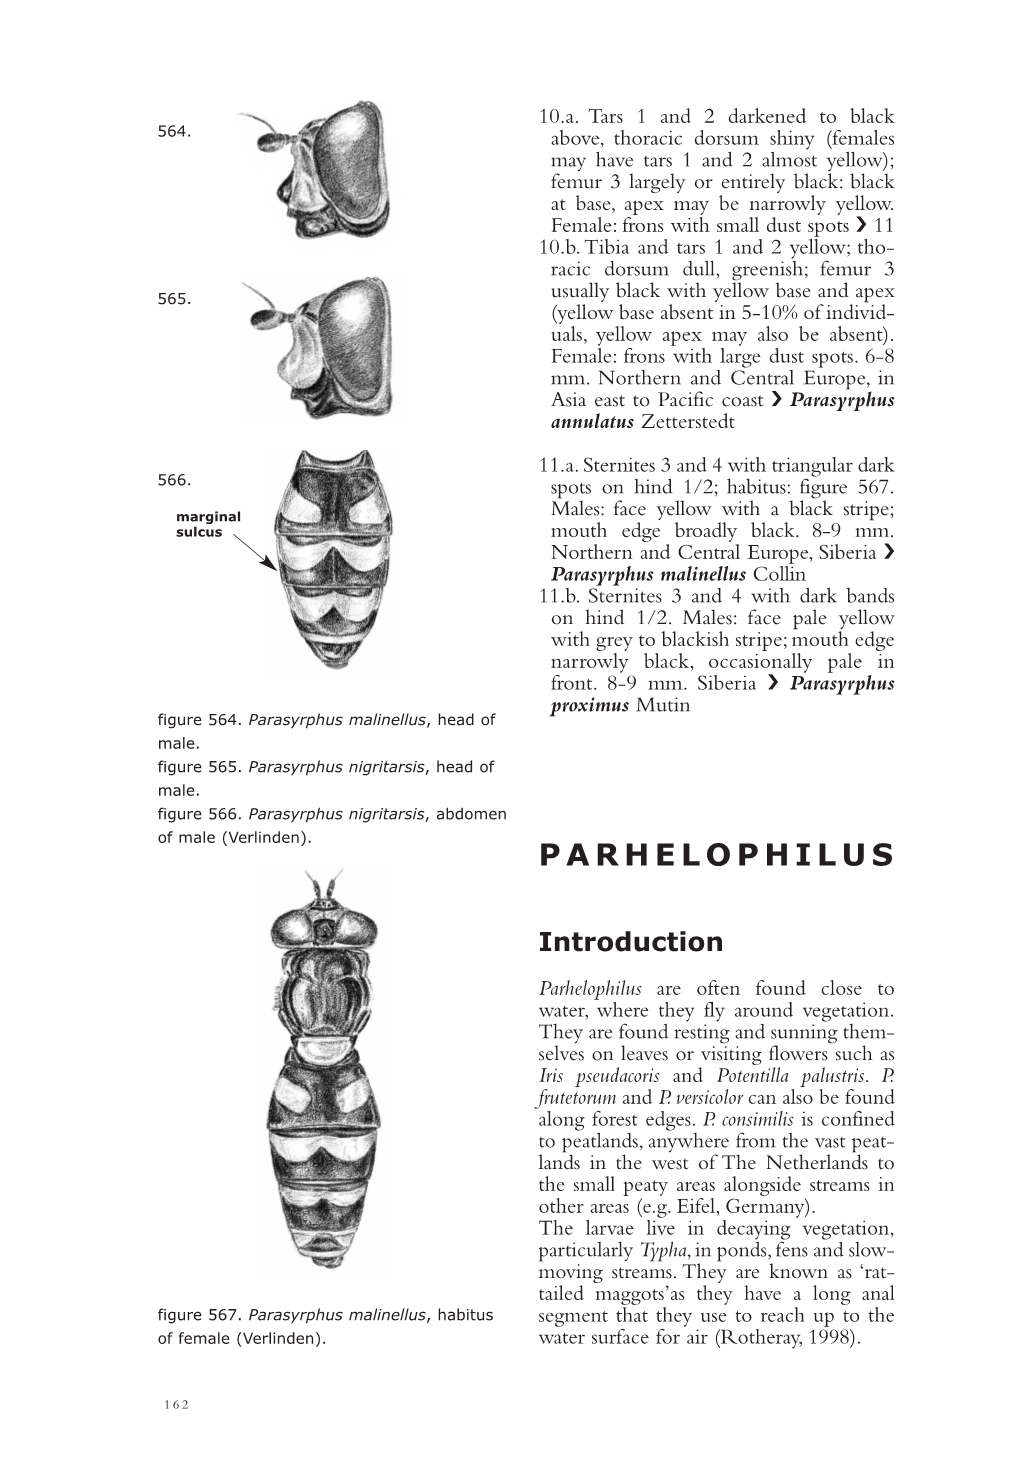 Parhelophilus